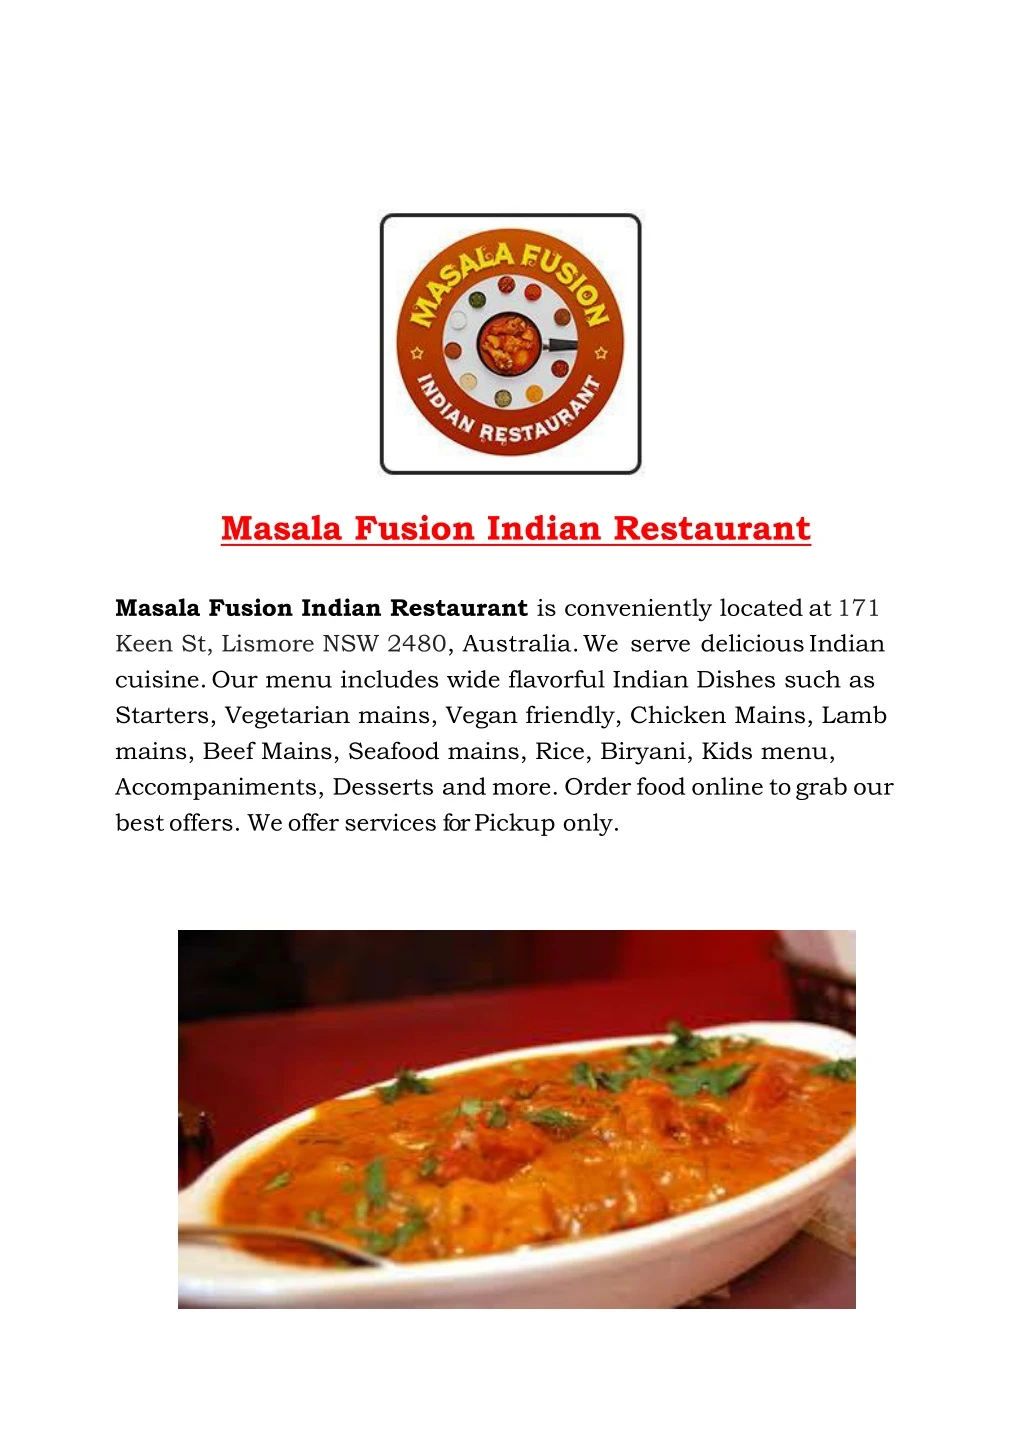 masala fusion indian restaurant